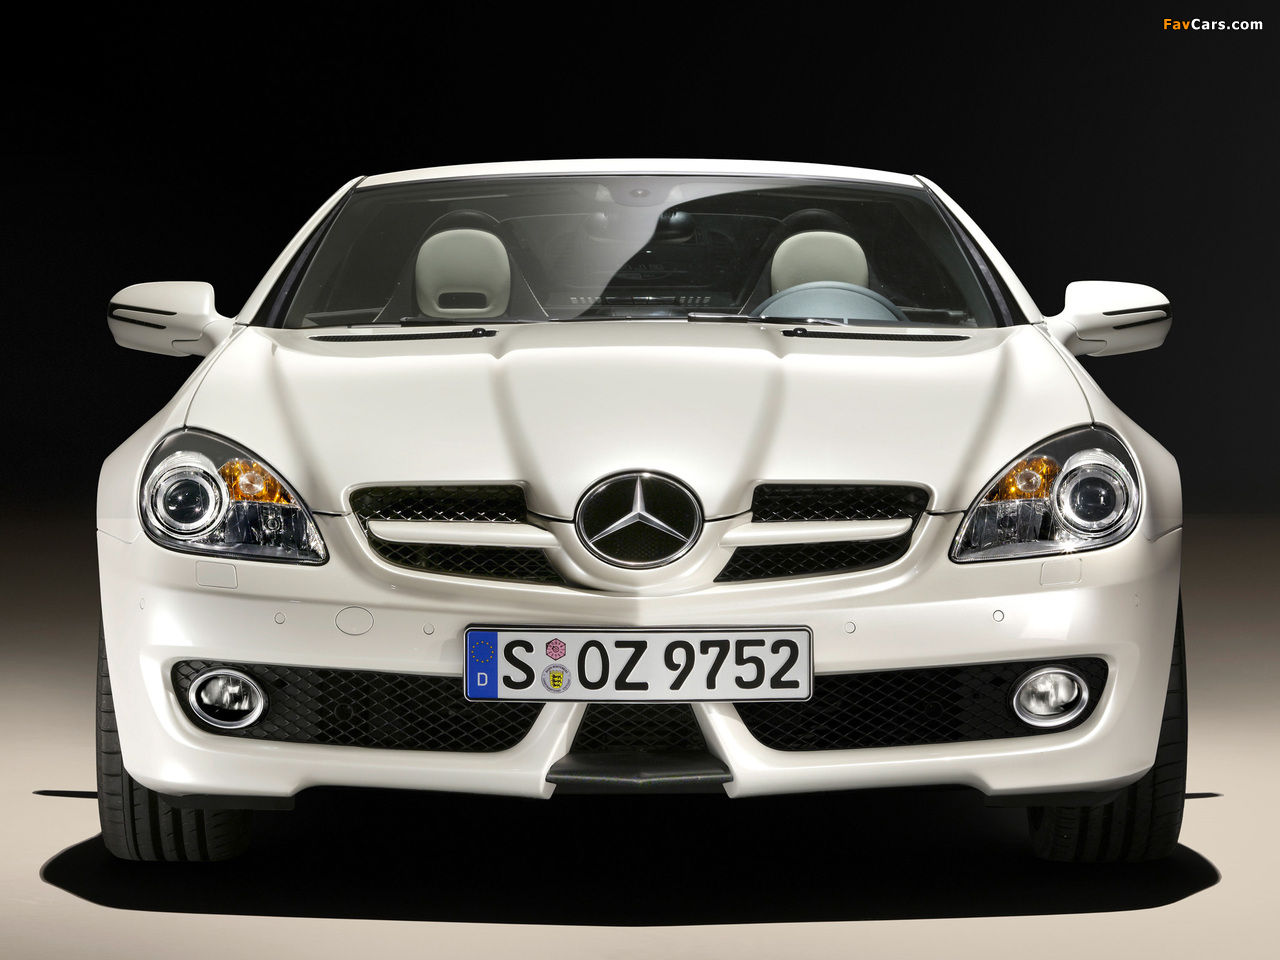 Mercedes-Benz SLK 350 2LOOK Edition (R171) 2009 photos (1280 x 960)